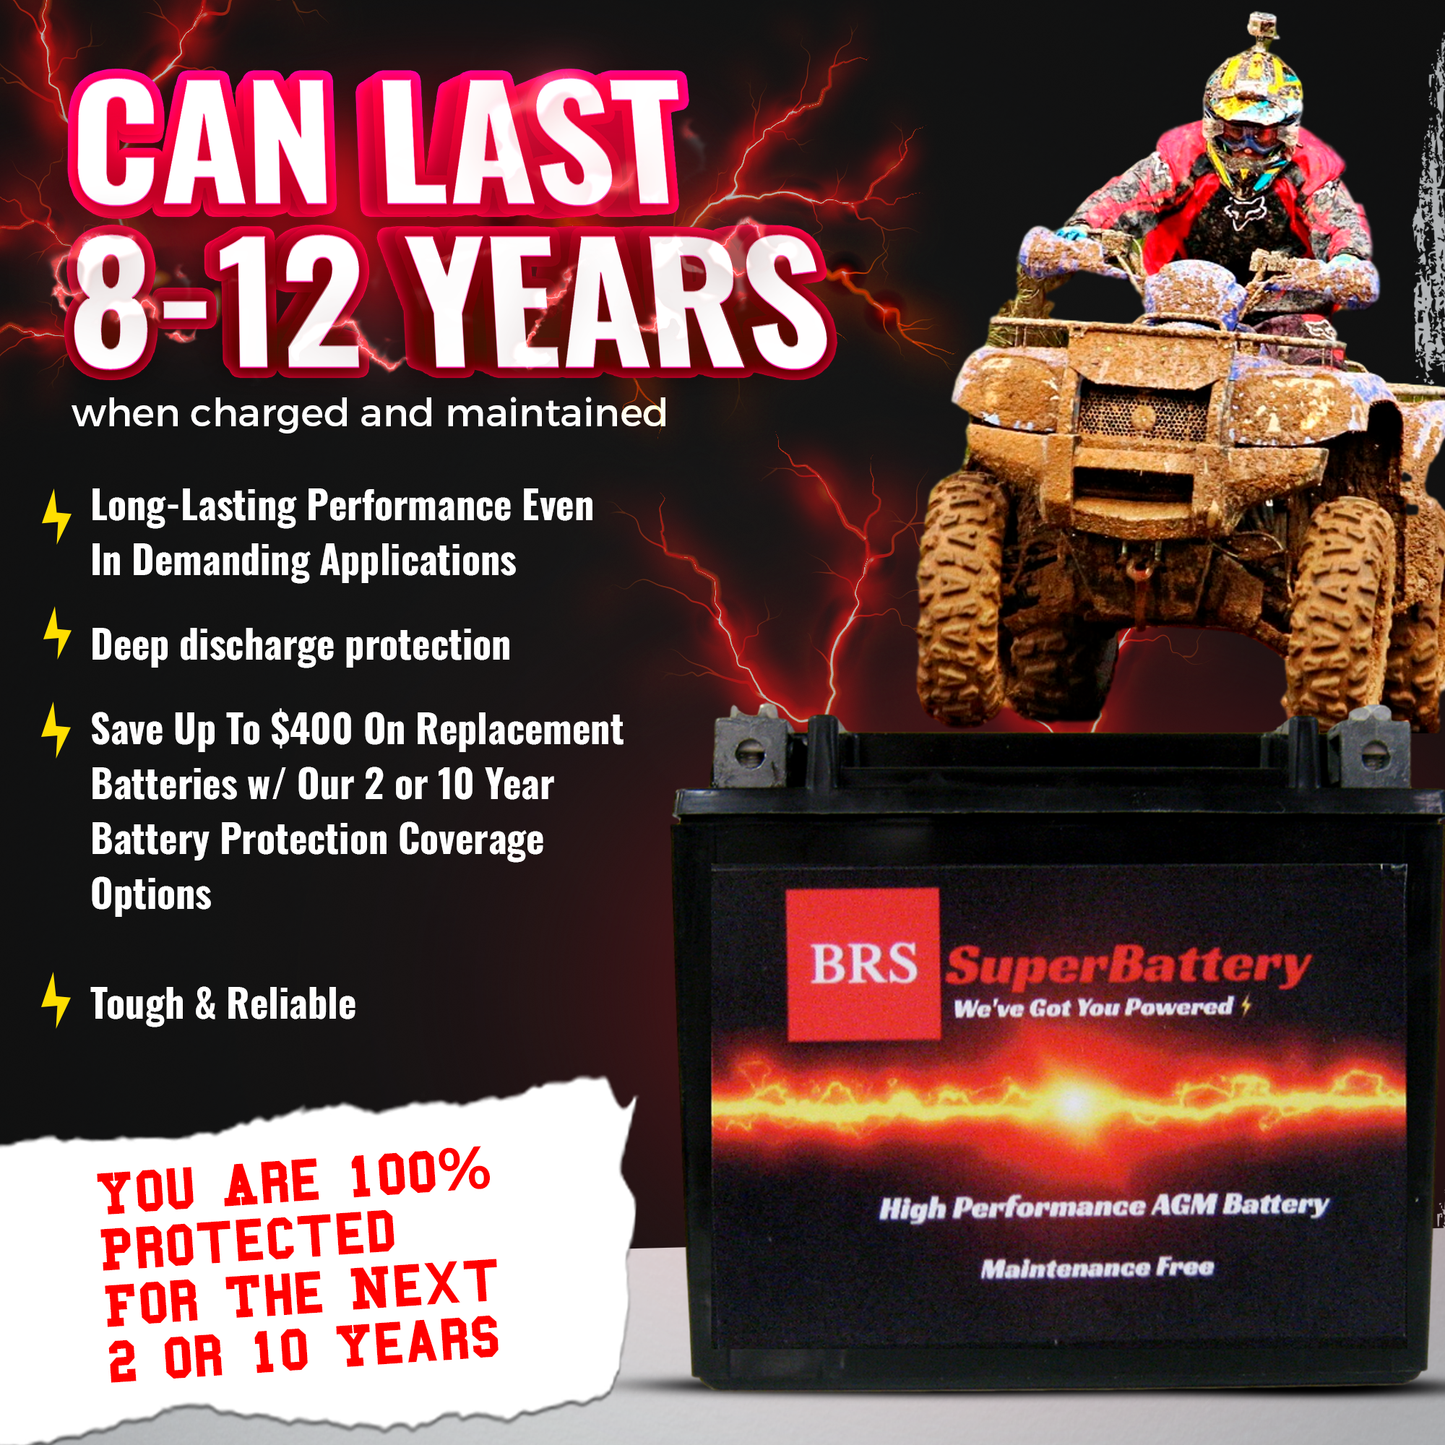 BRS24HL-BS 12v High Performance Sealed AGM PowerSport 10 Year Battery - BRS Super Battery